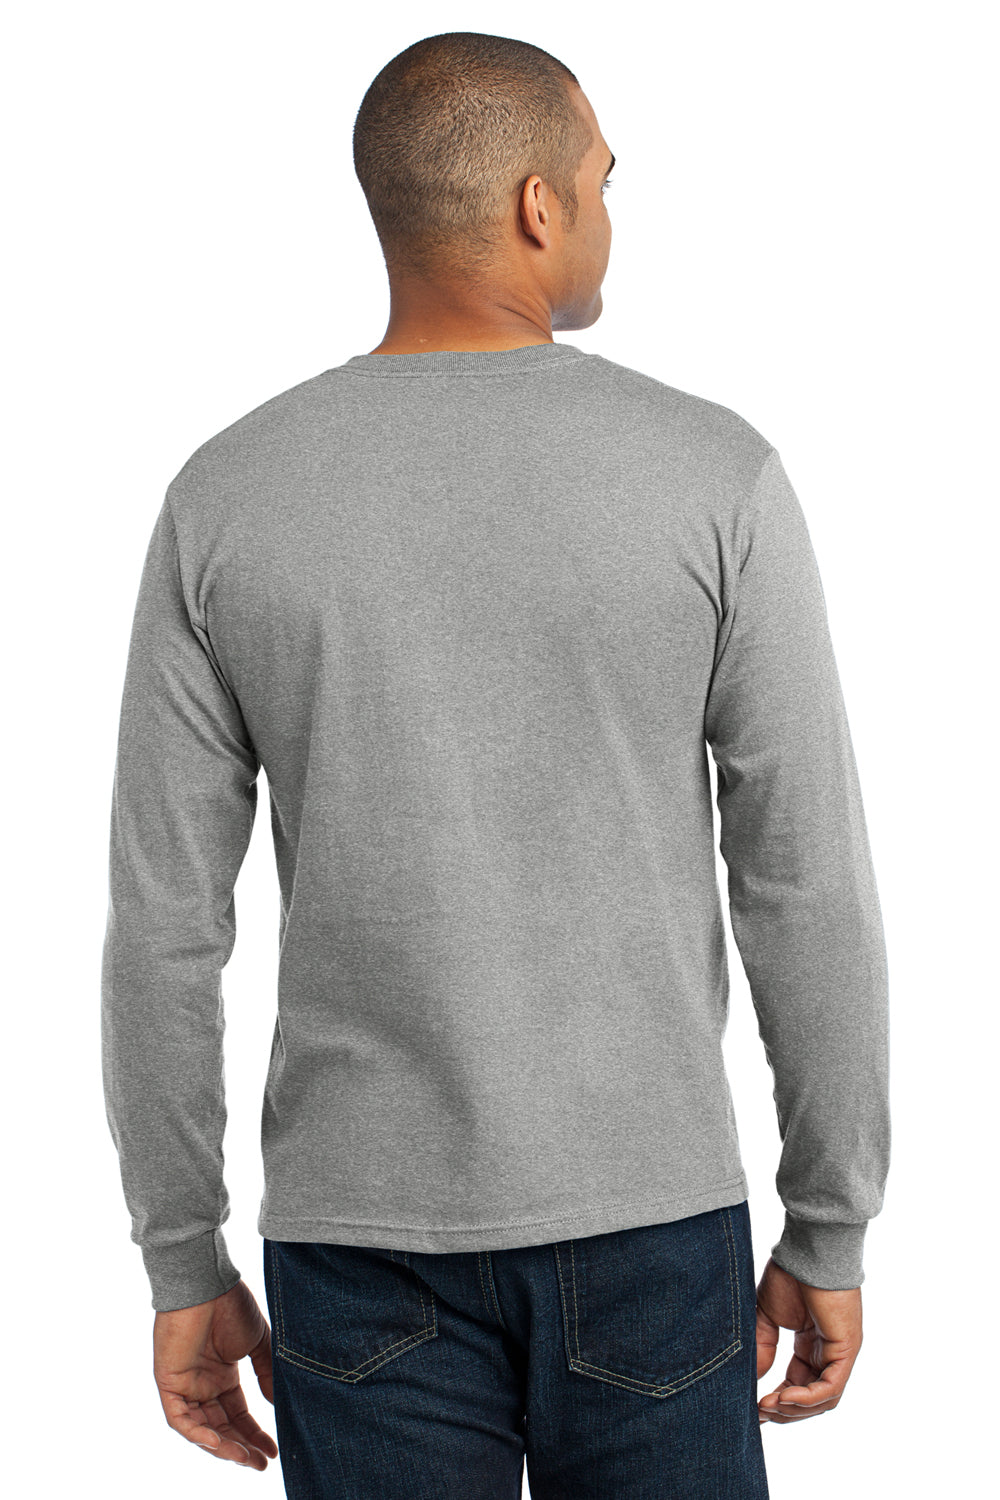 Port & Company USA100LS Mens USA Made Long Sleeve Crewneck T-Shirt Heather Grey Back